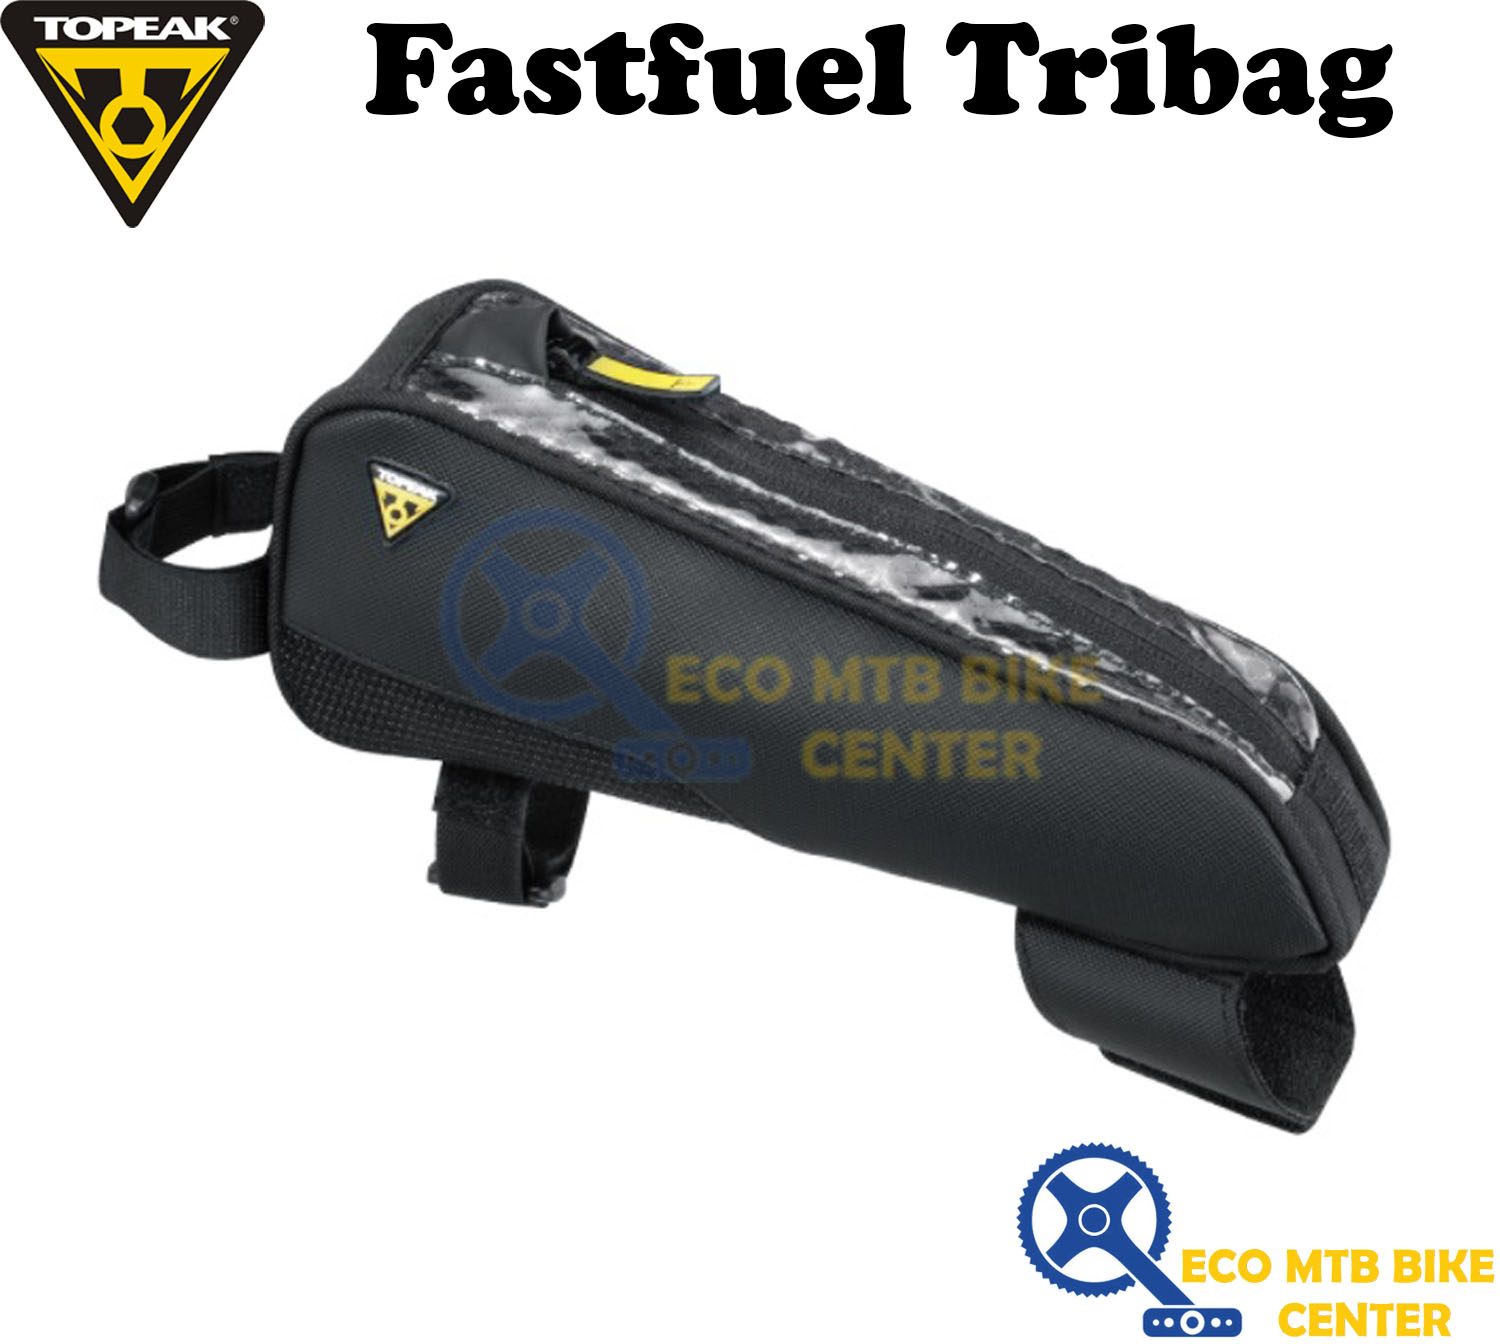 TOPEAK Fastfuel Tribag